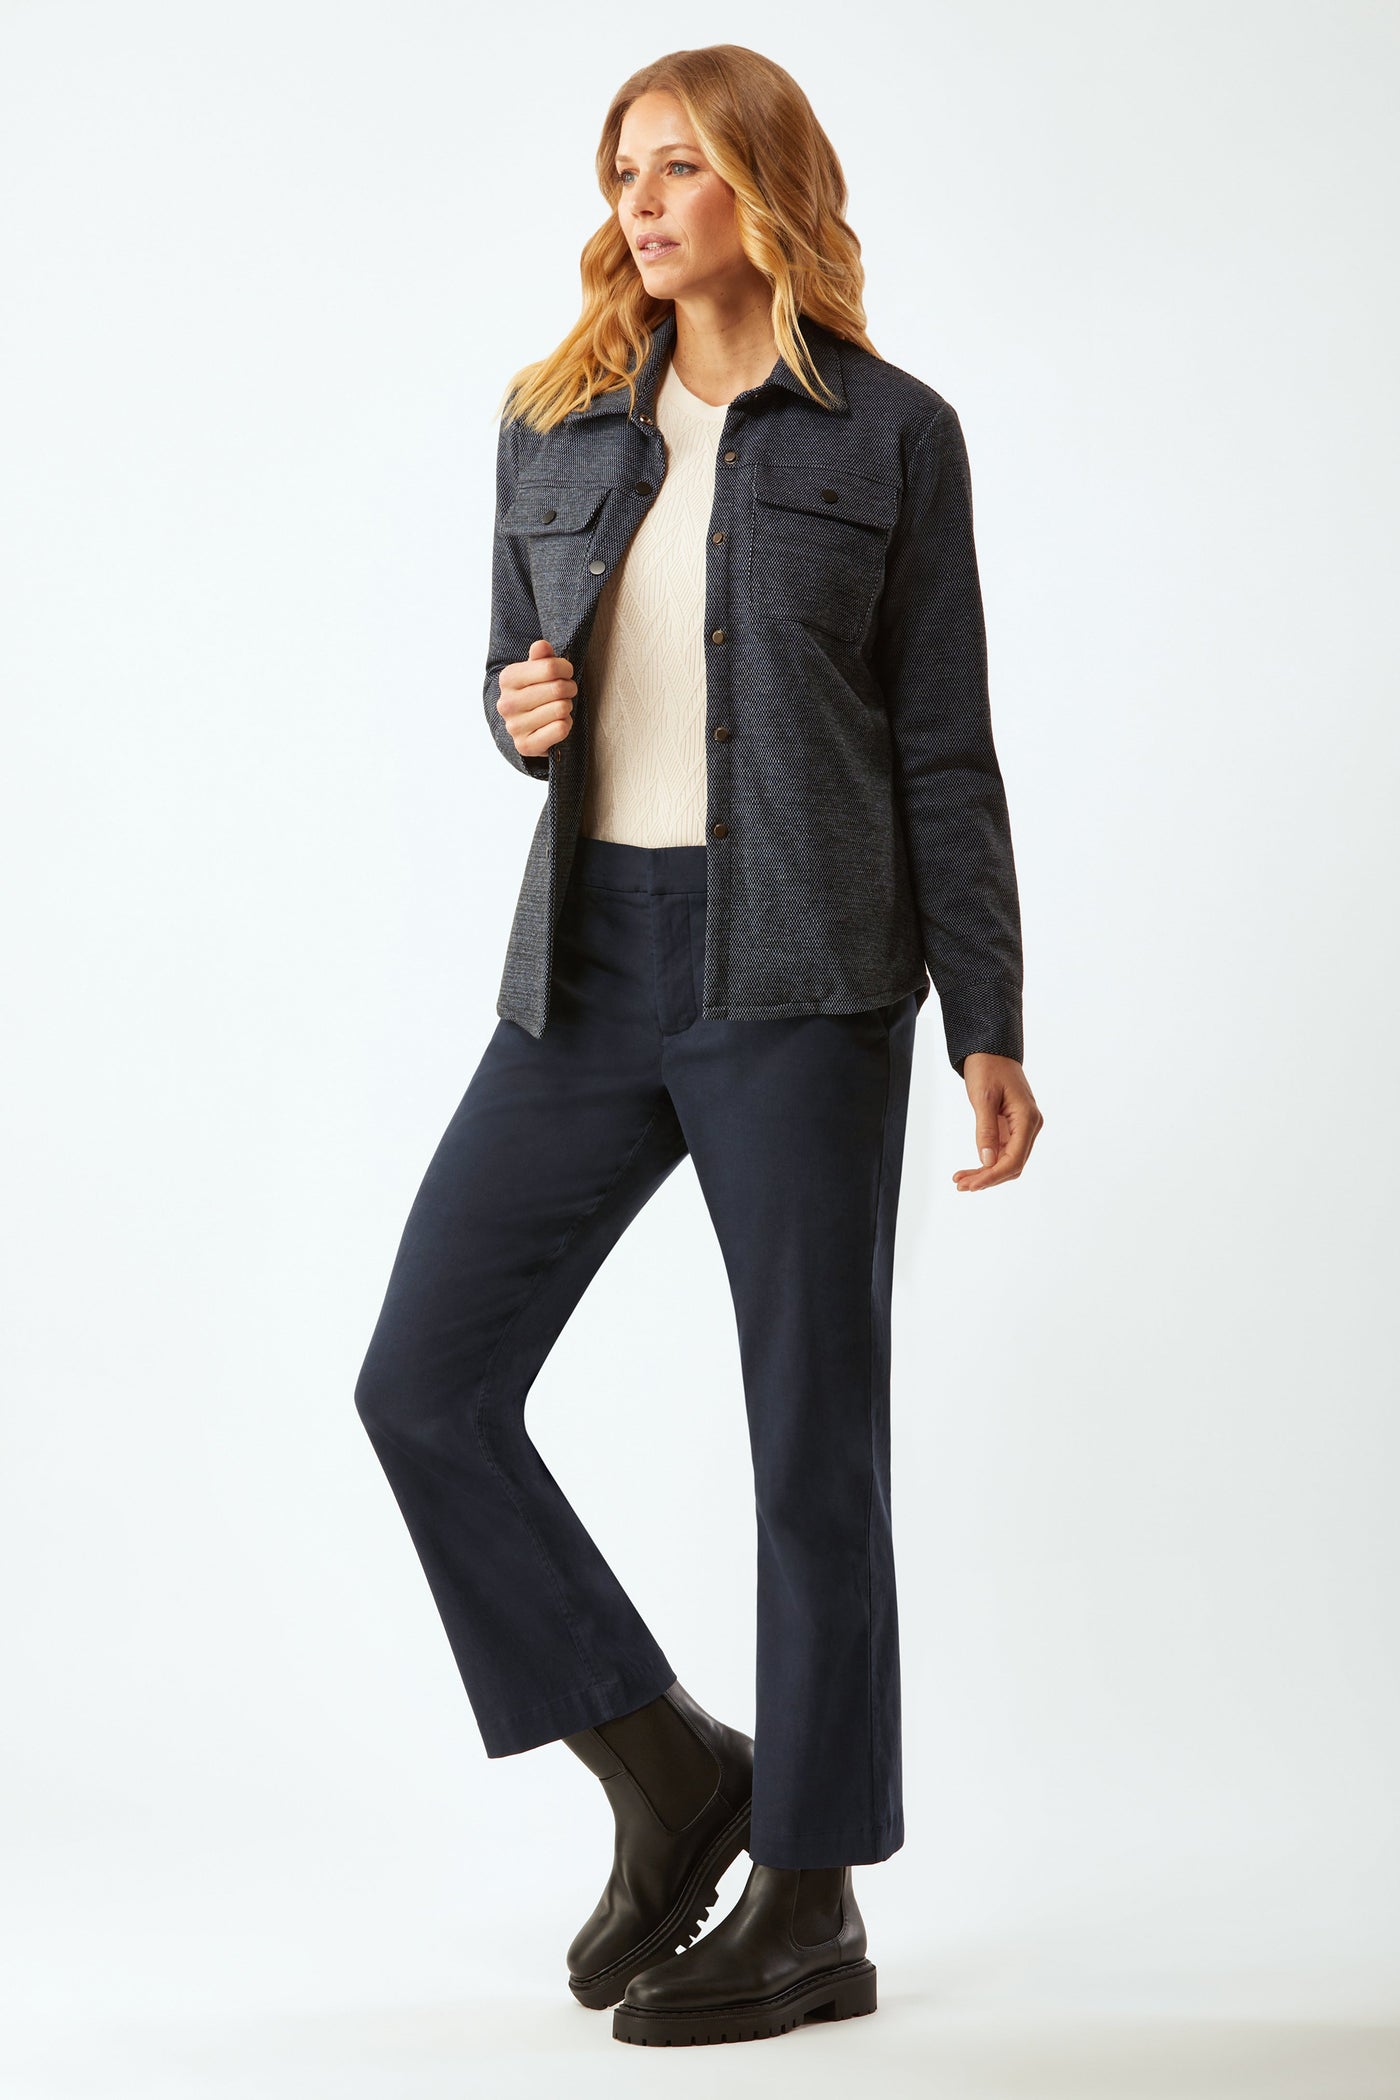 Shirt Jacket With Zip-Out Liner - Indigo Tweed